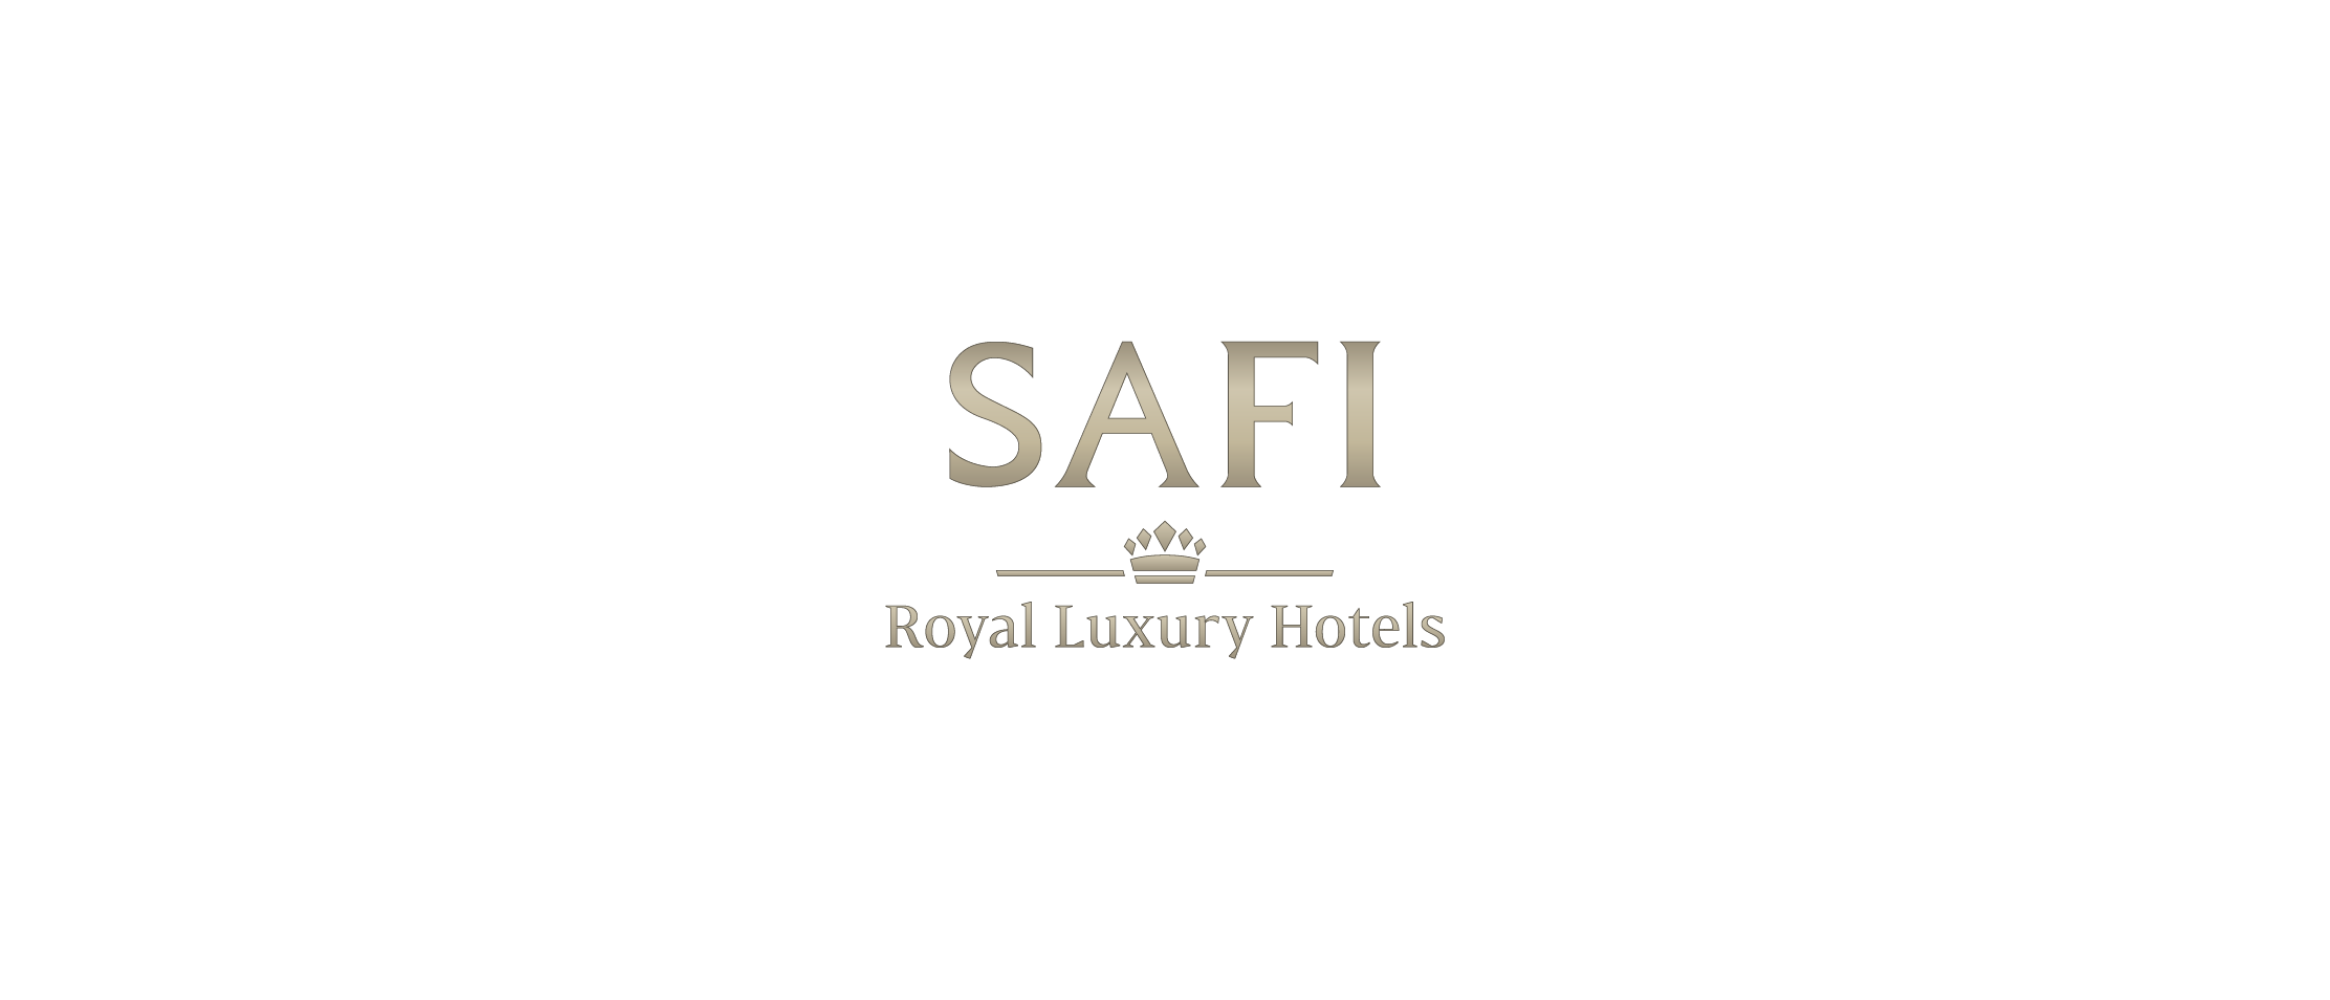 Safi Royal Luxury Hotels